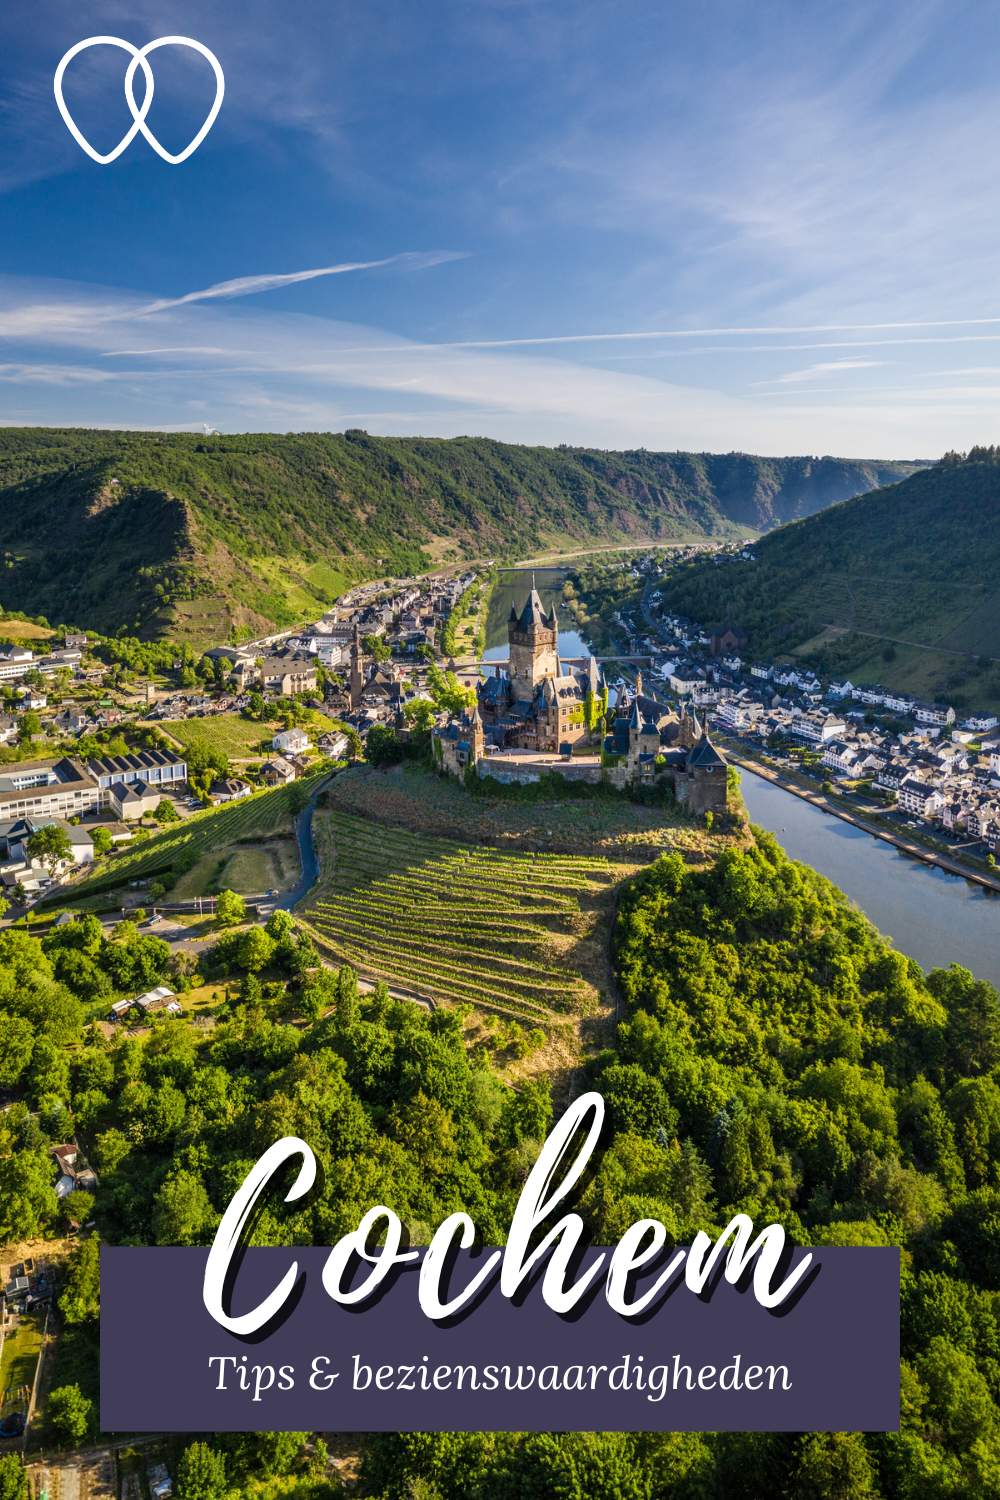 Cochem, Duitsland: bekijk alle leuke bezienswaardigheden in Cochem en omgeving | Mooistestedentrips.nl